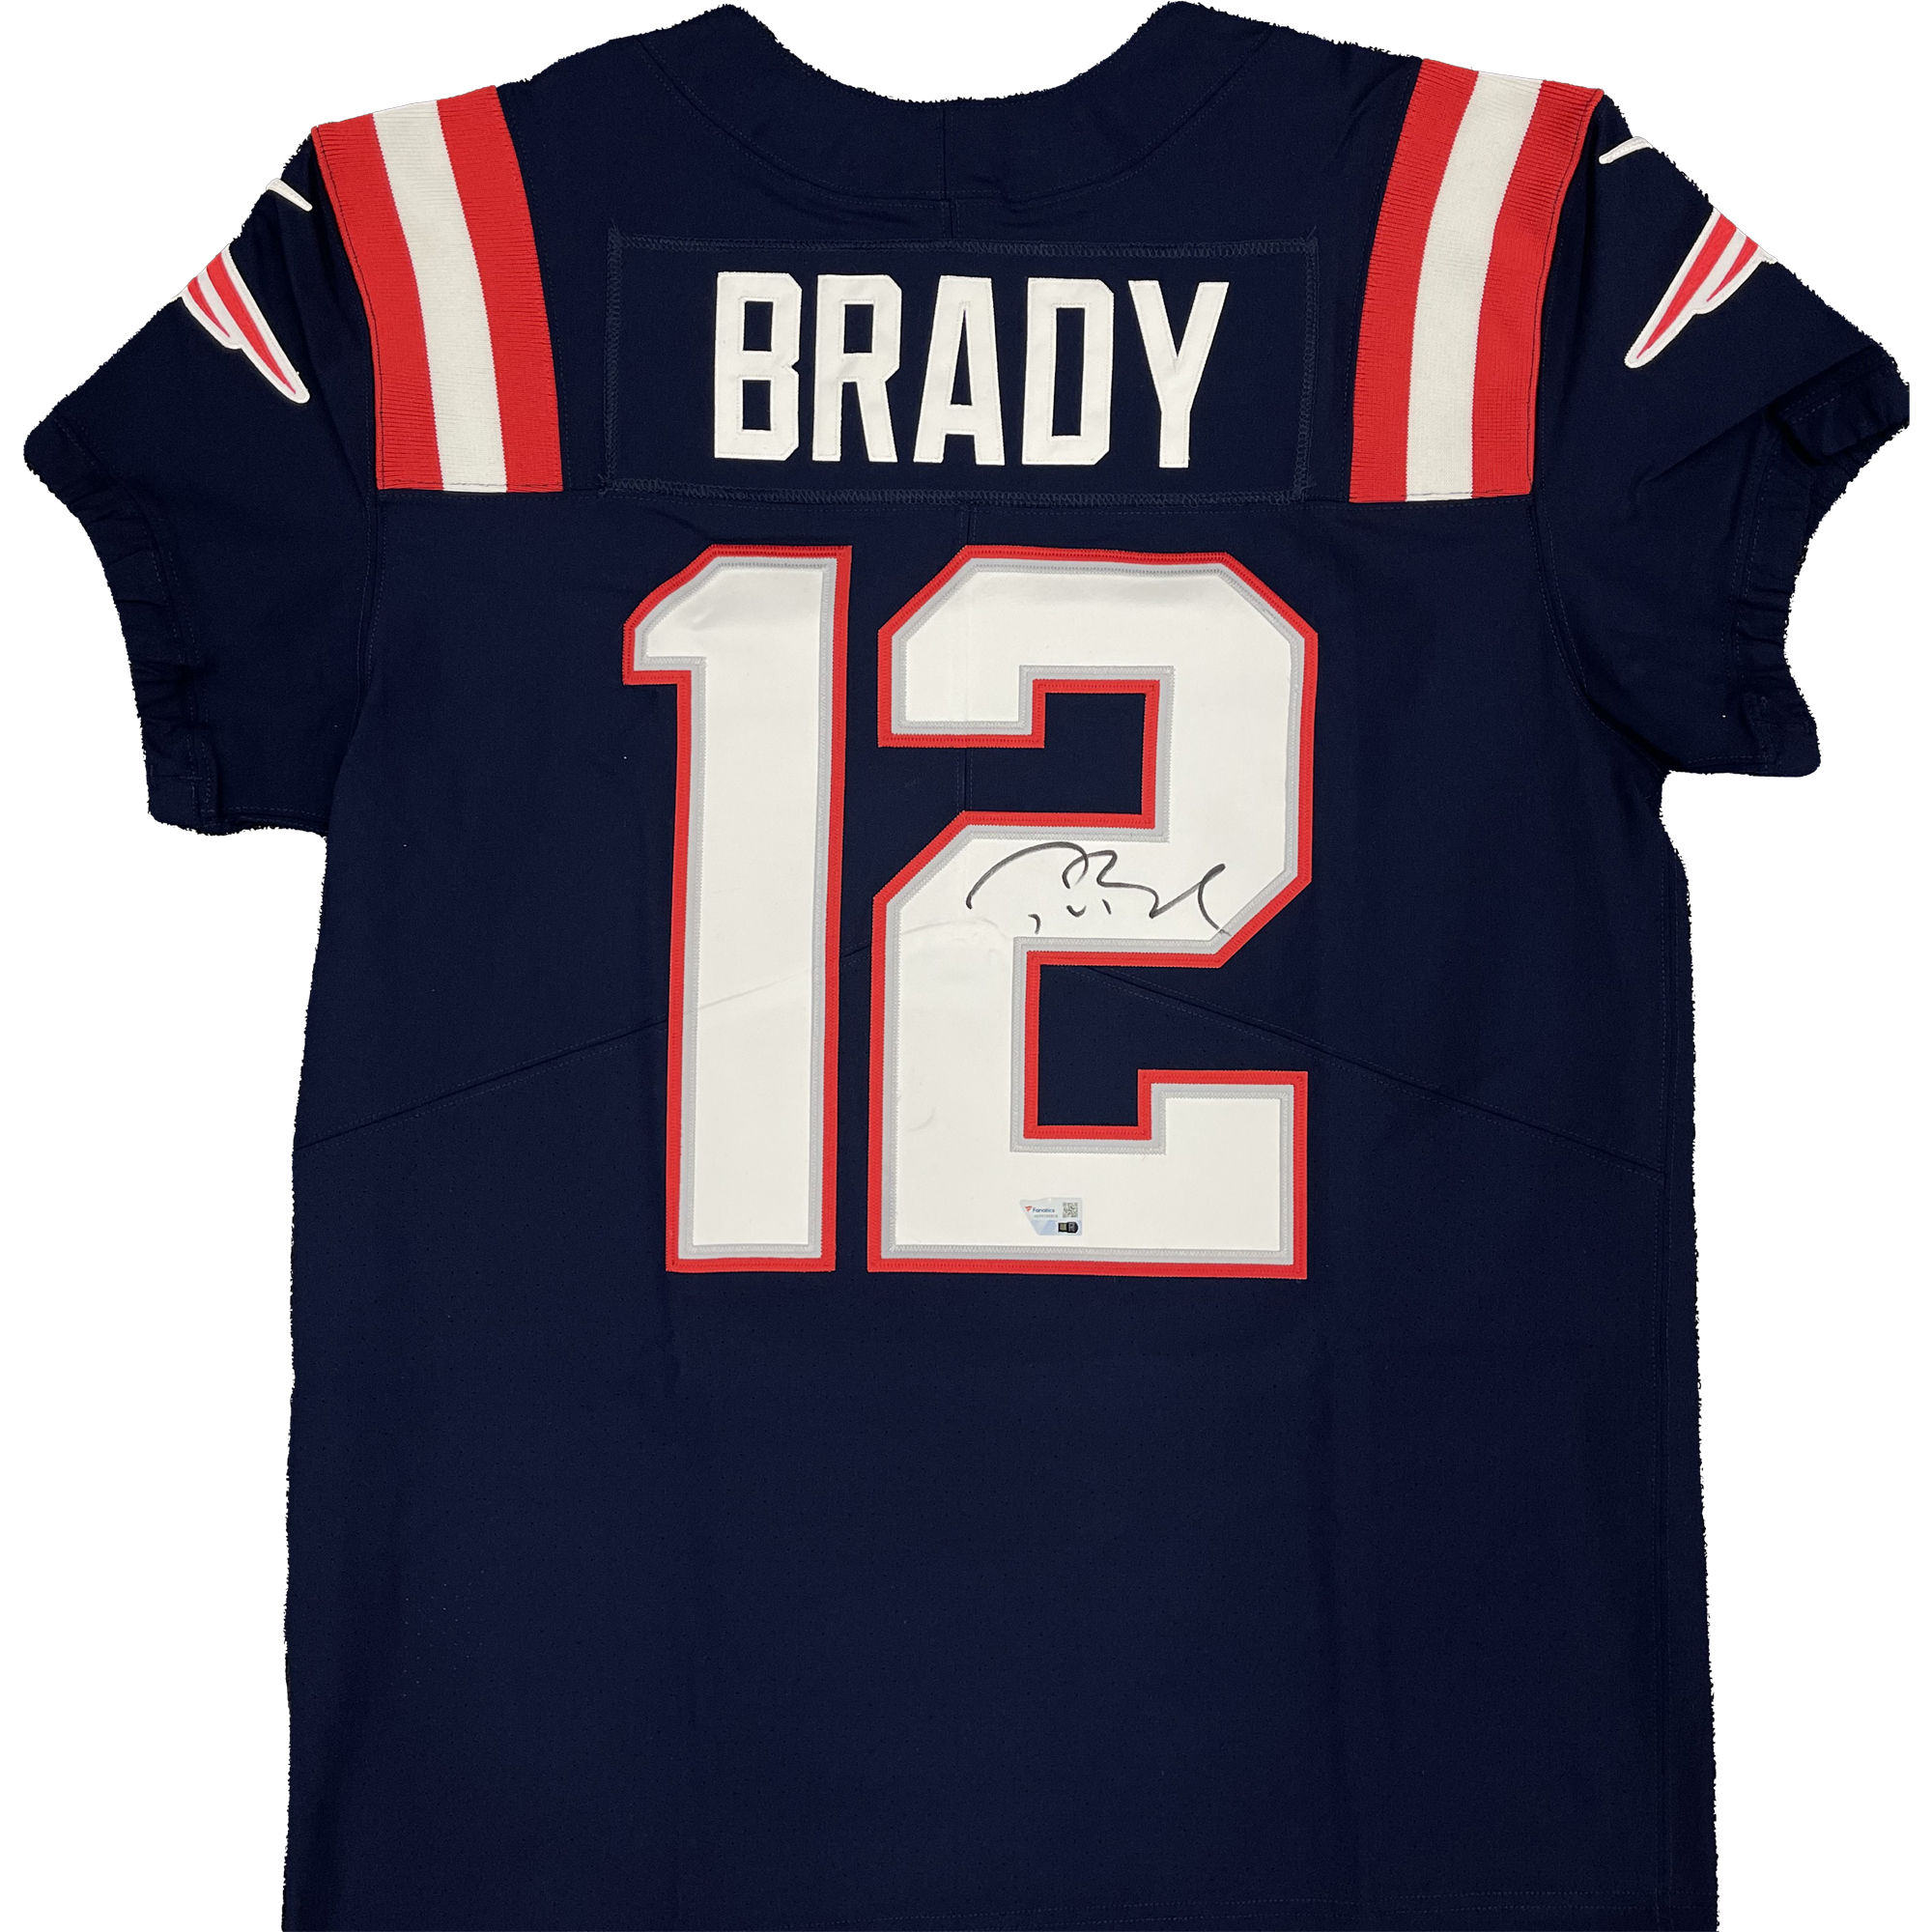 Tom Brady Signed Custom Framed Jersey (Fanatics Hologram), 52% OFF